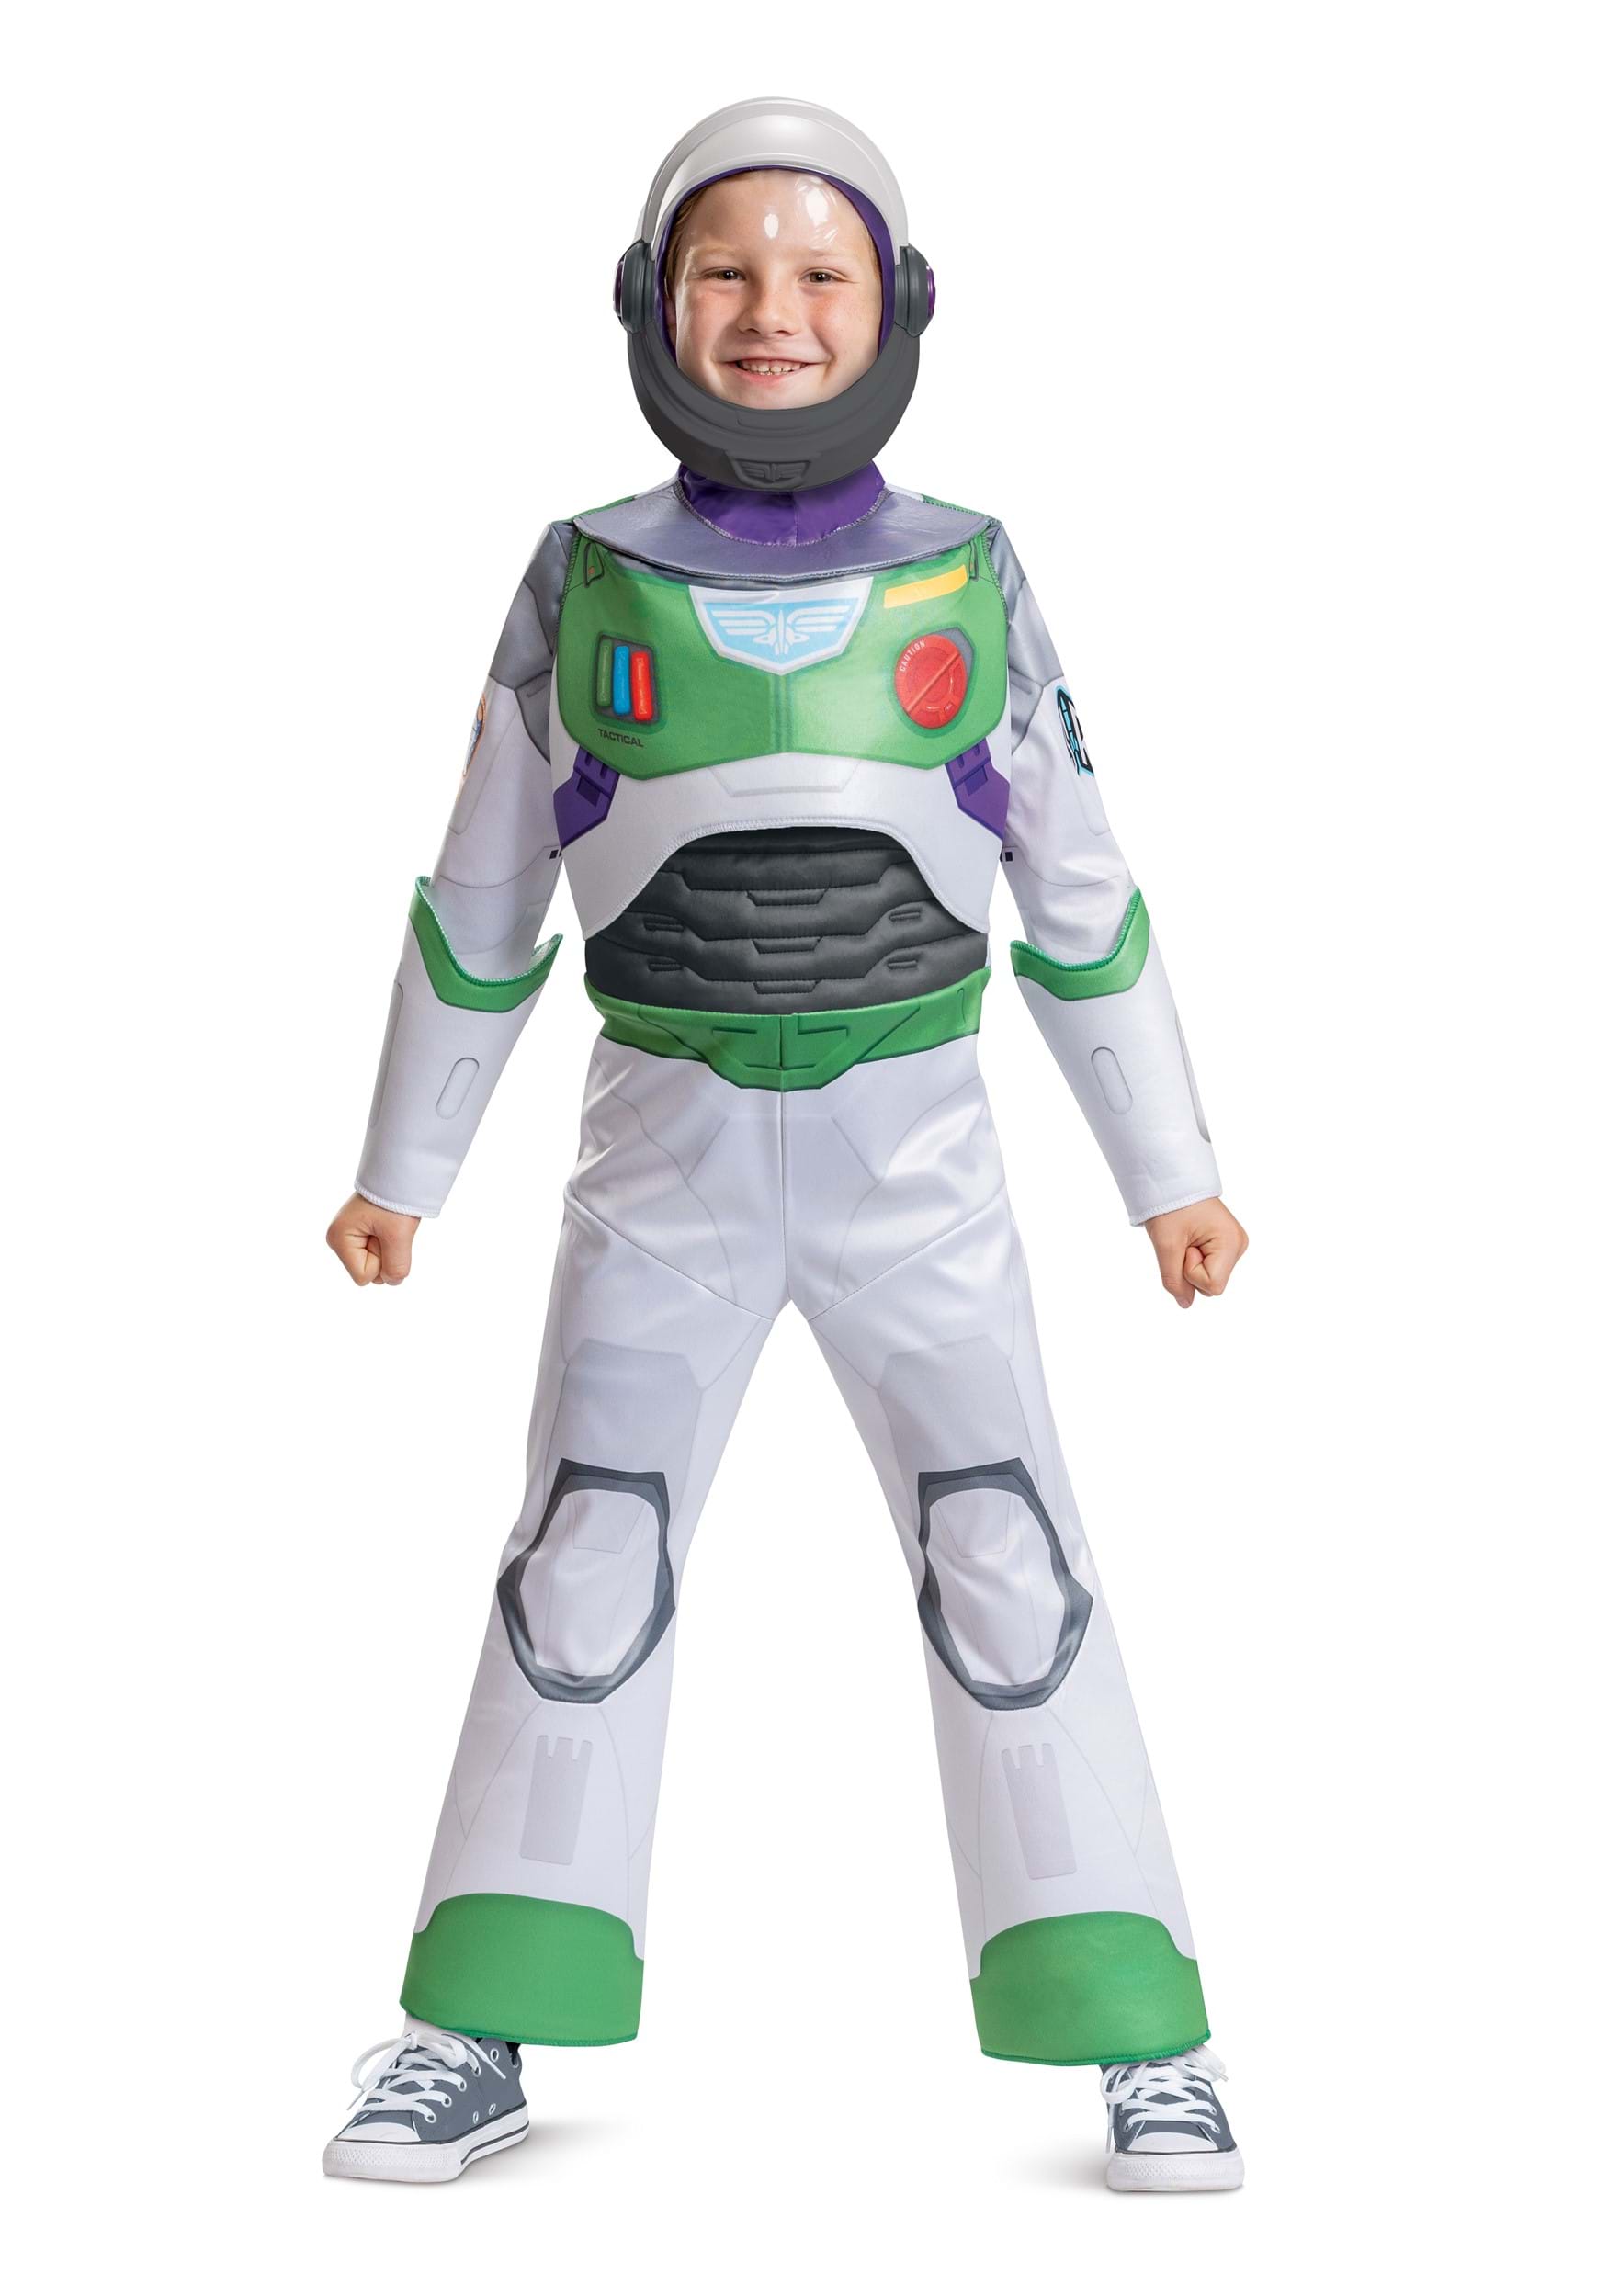 Lightyear Space Ranger Kid